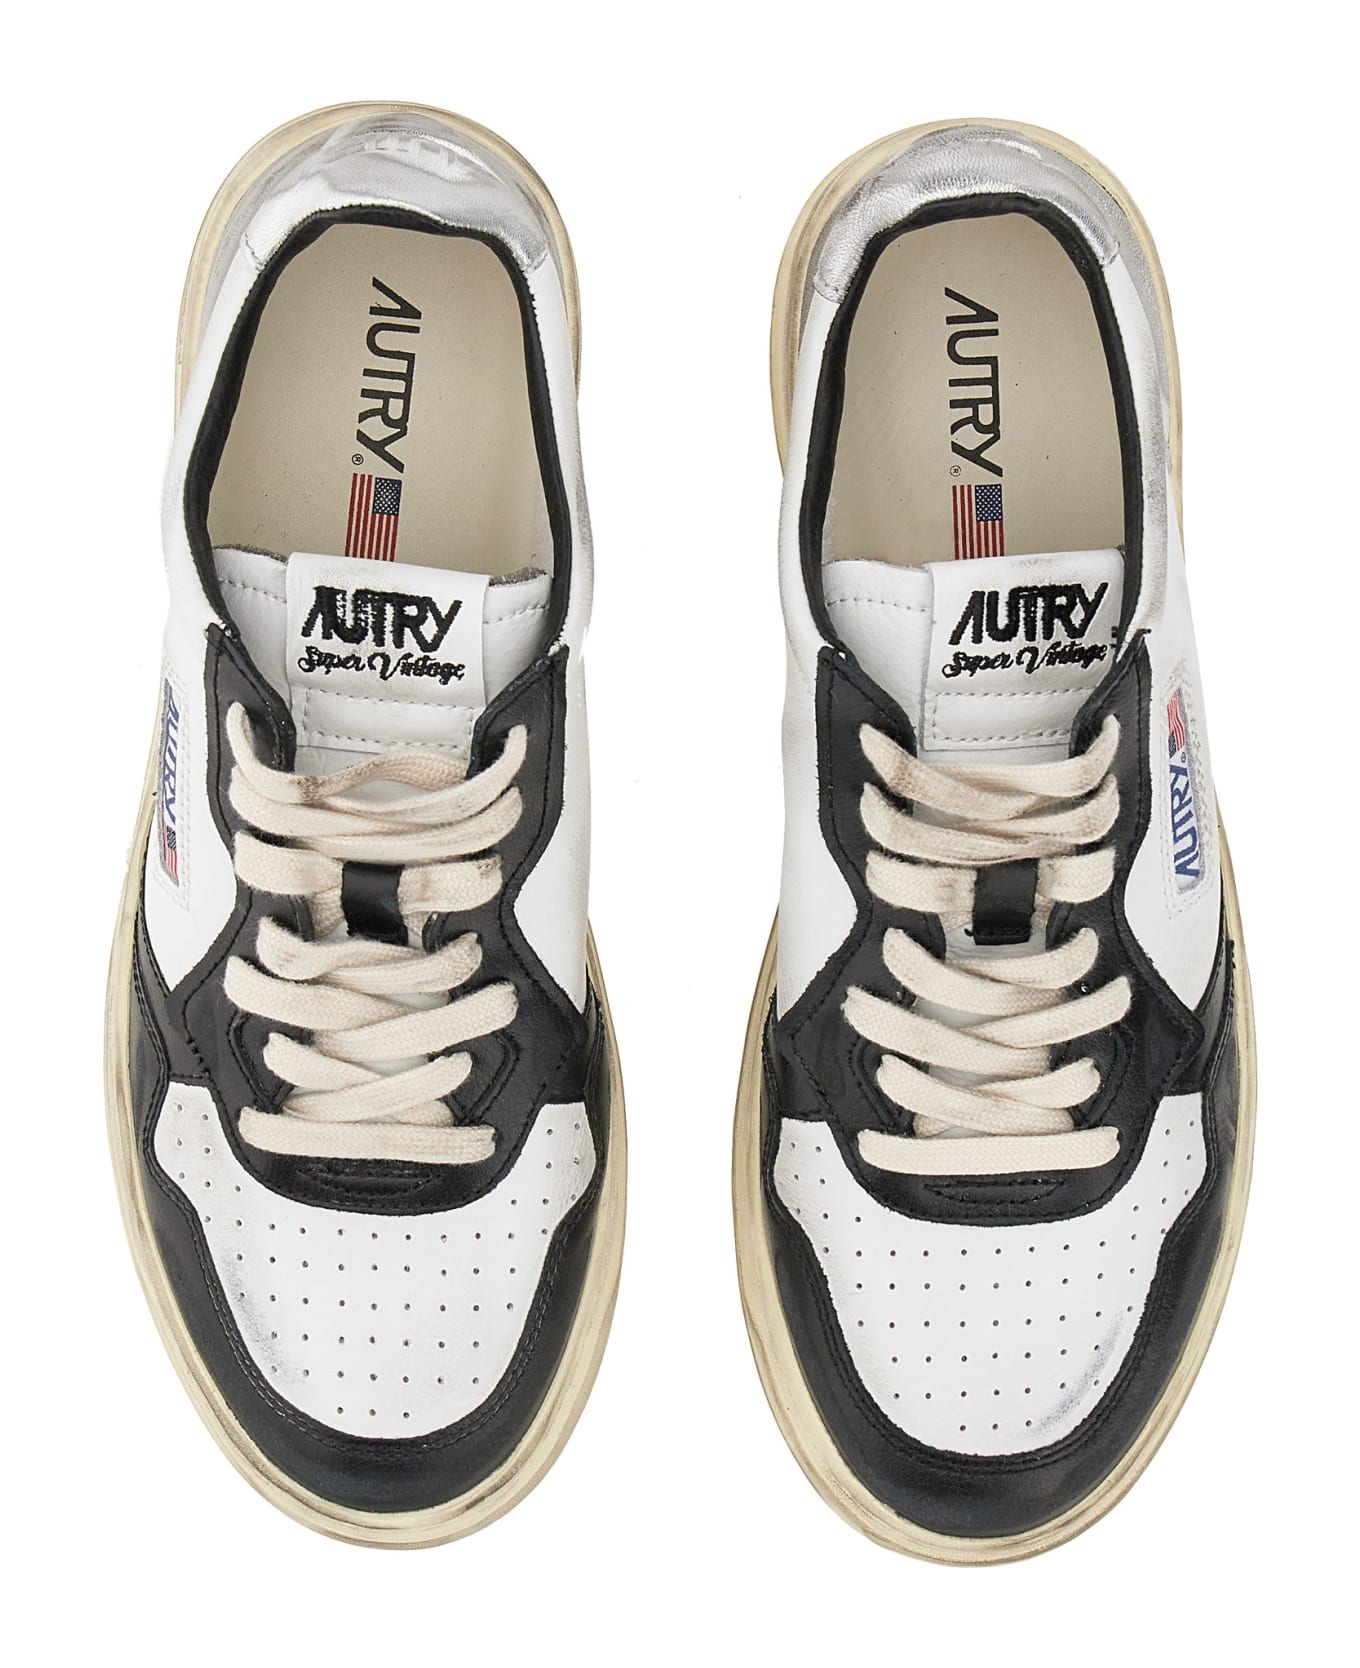 Autry Super Vintage Low Sneakers - Bianco